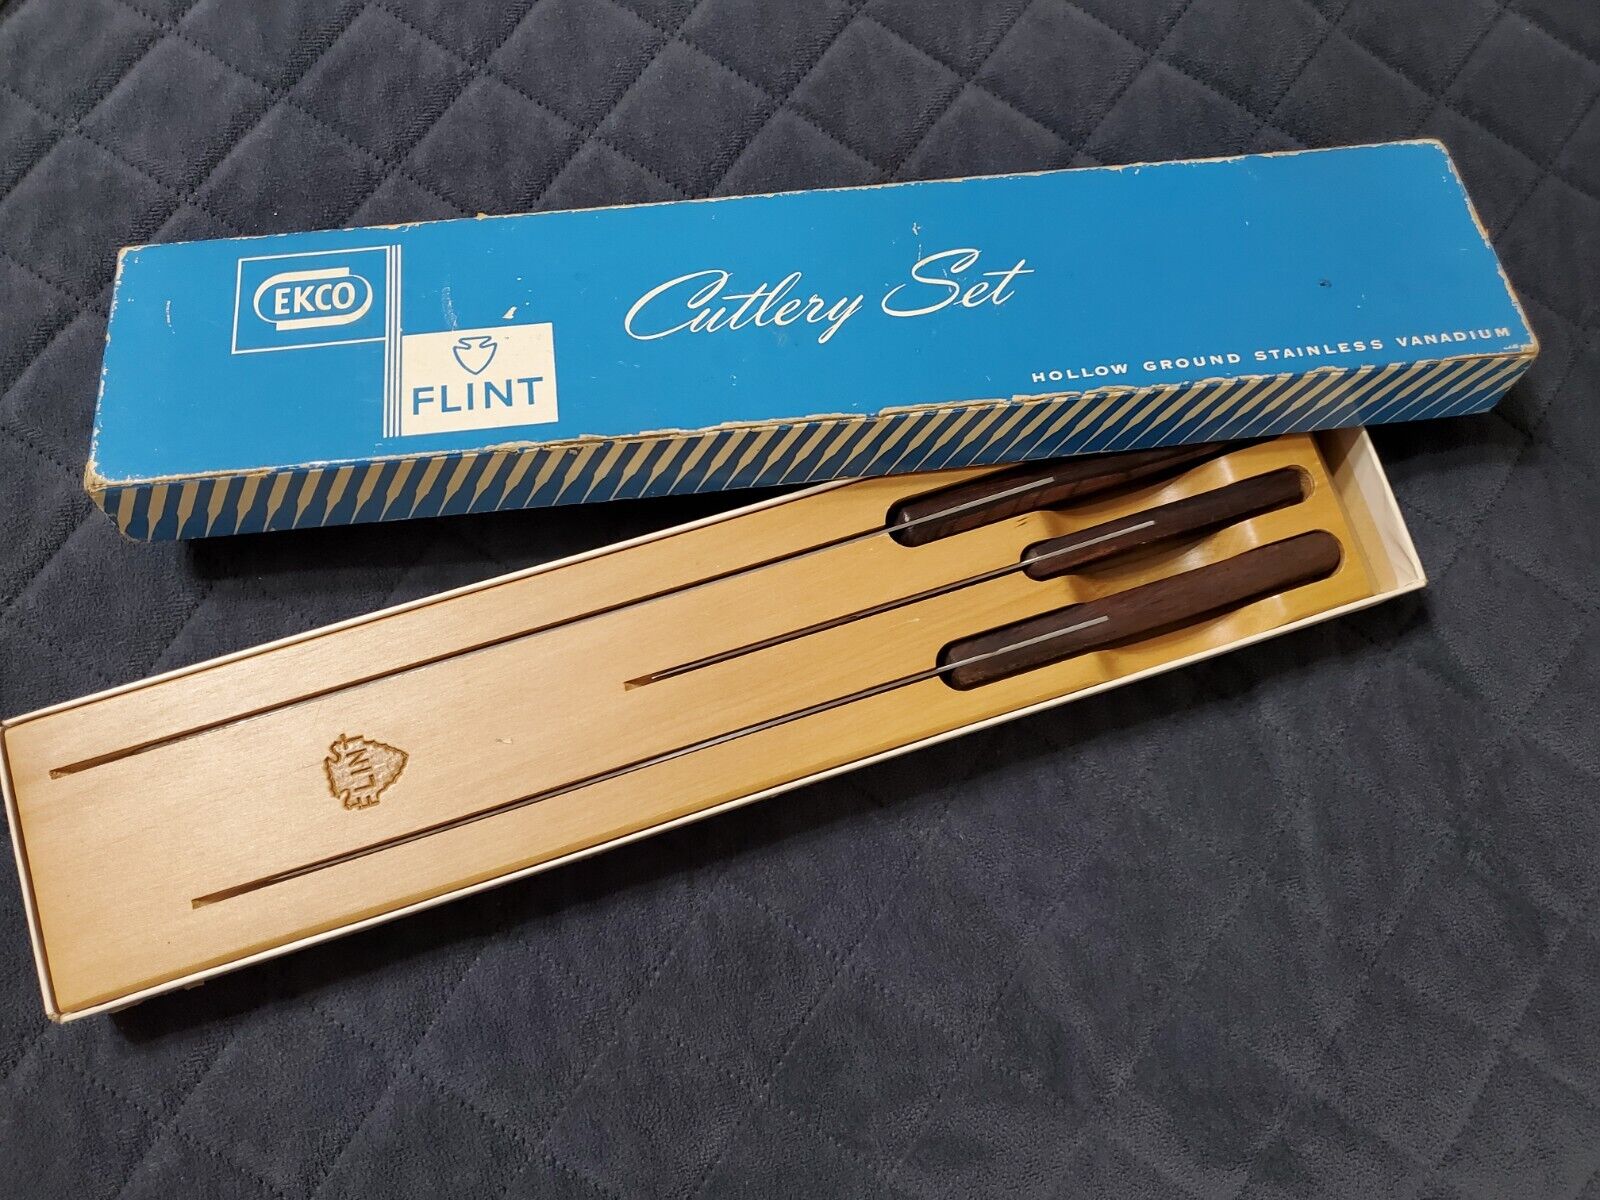 Vintage NOS Ekco Flint Cutlery Knives  Stainless Vanadium Set 7028 Original Box